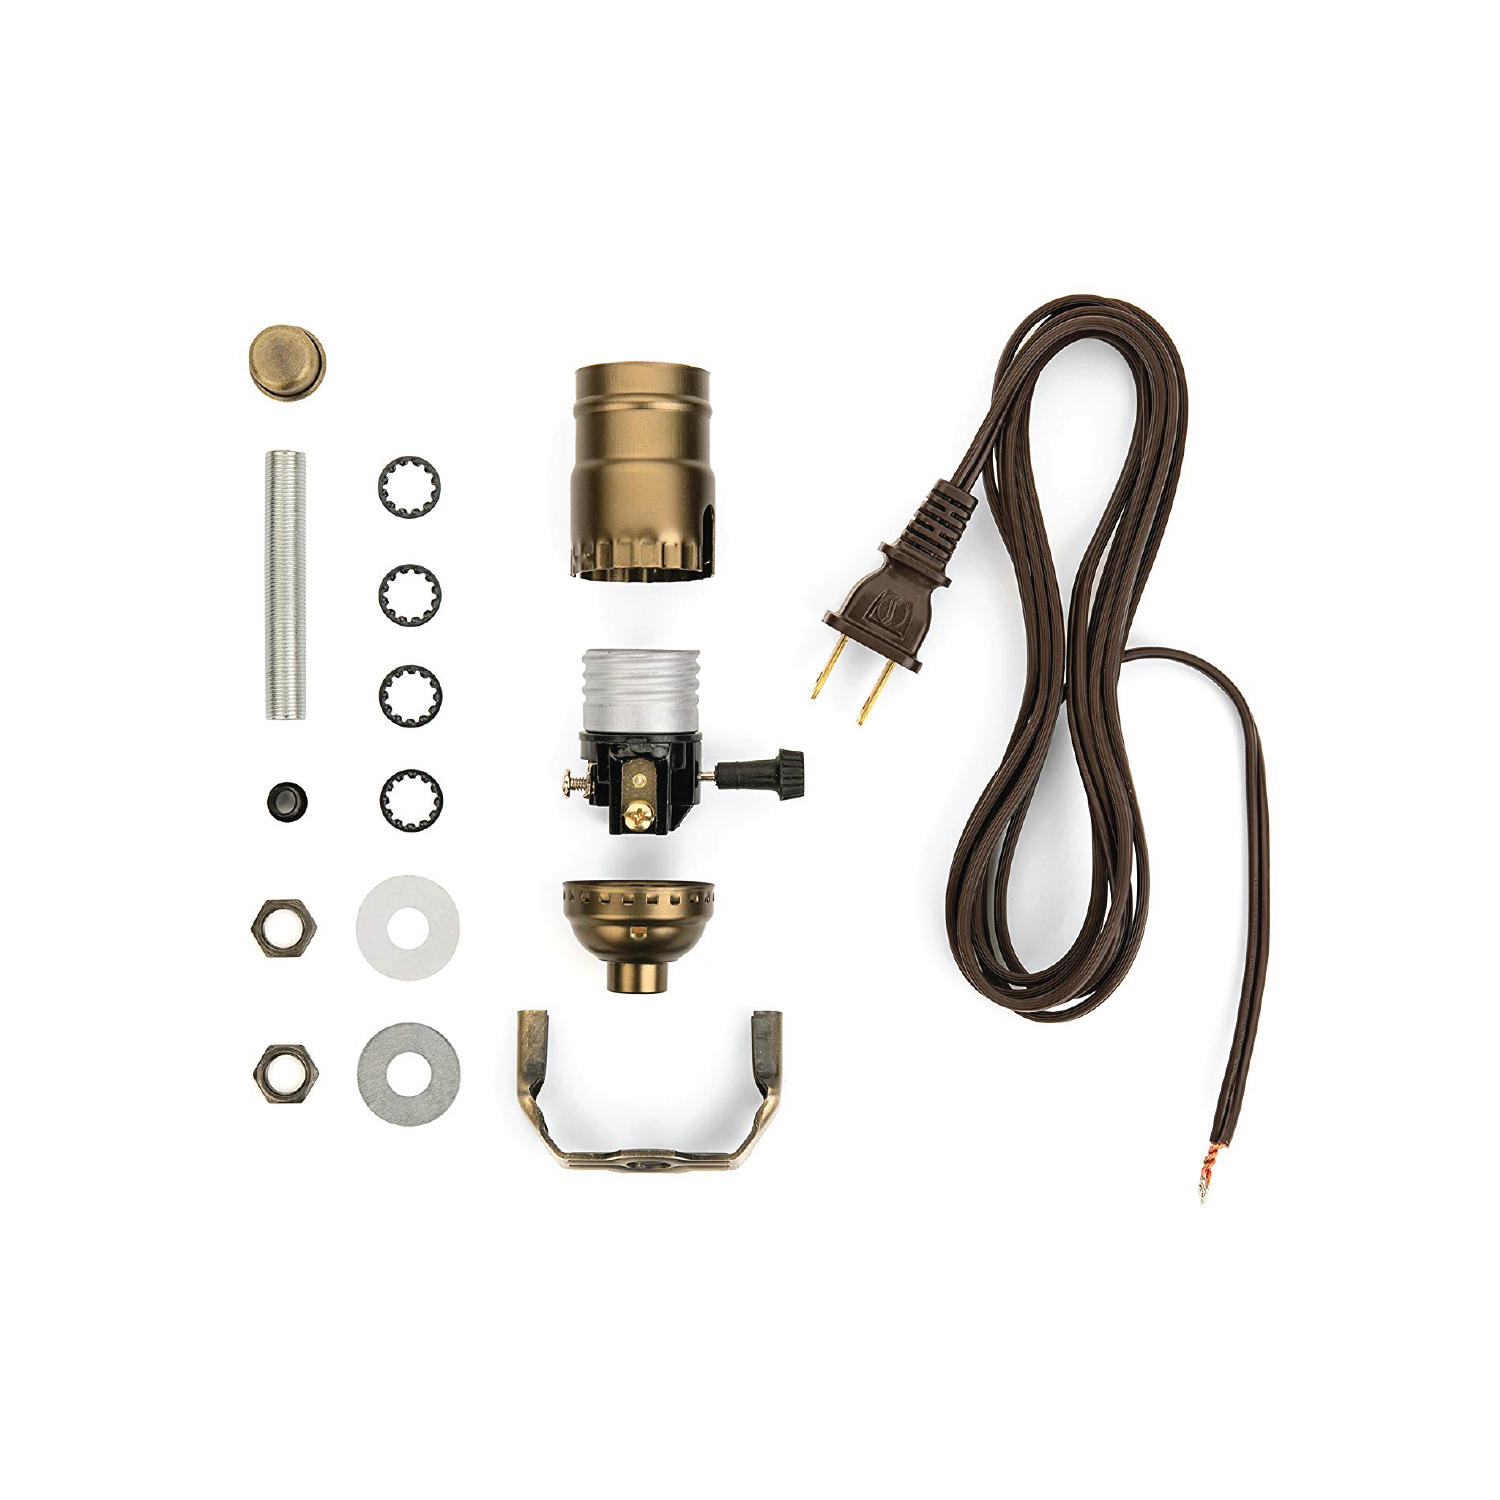 Royal Designs DIY Lamp Making Kit - Make, Repurpose, and Repair – 3-Way Socket - 8 inch Harp - Polished Brass